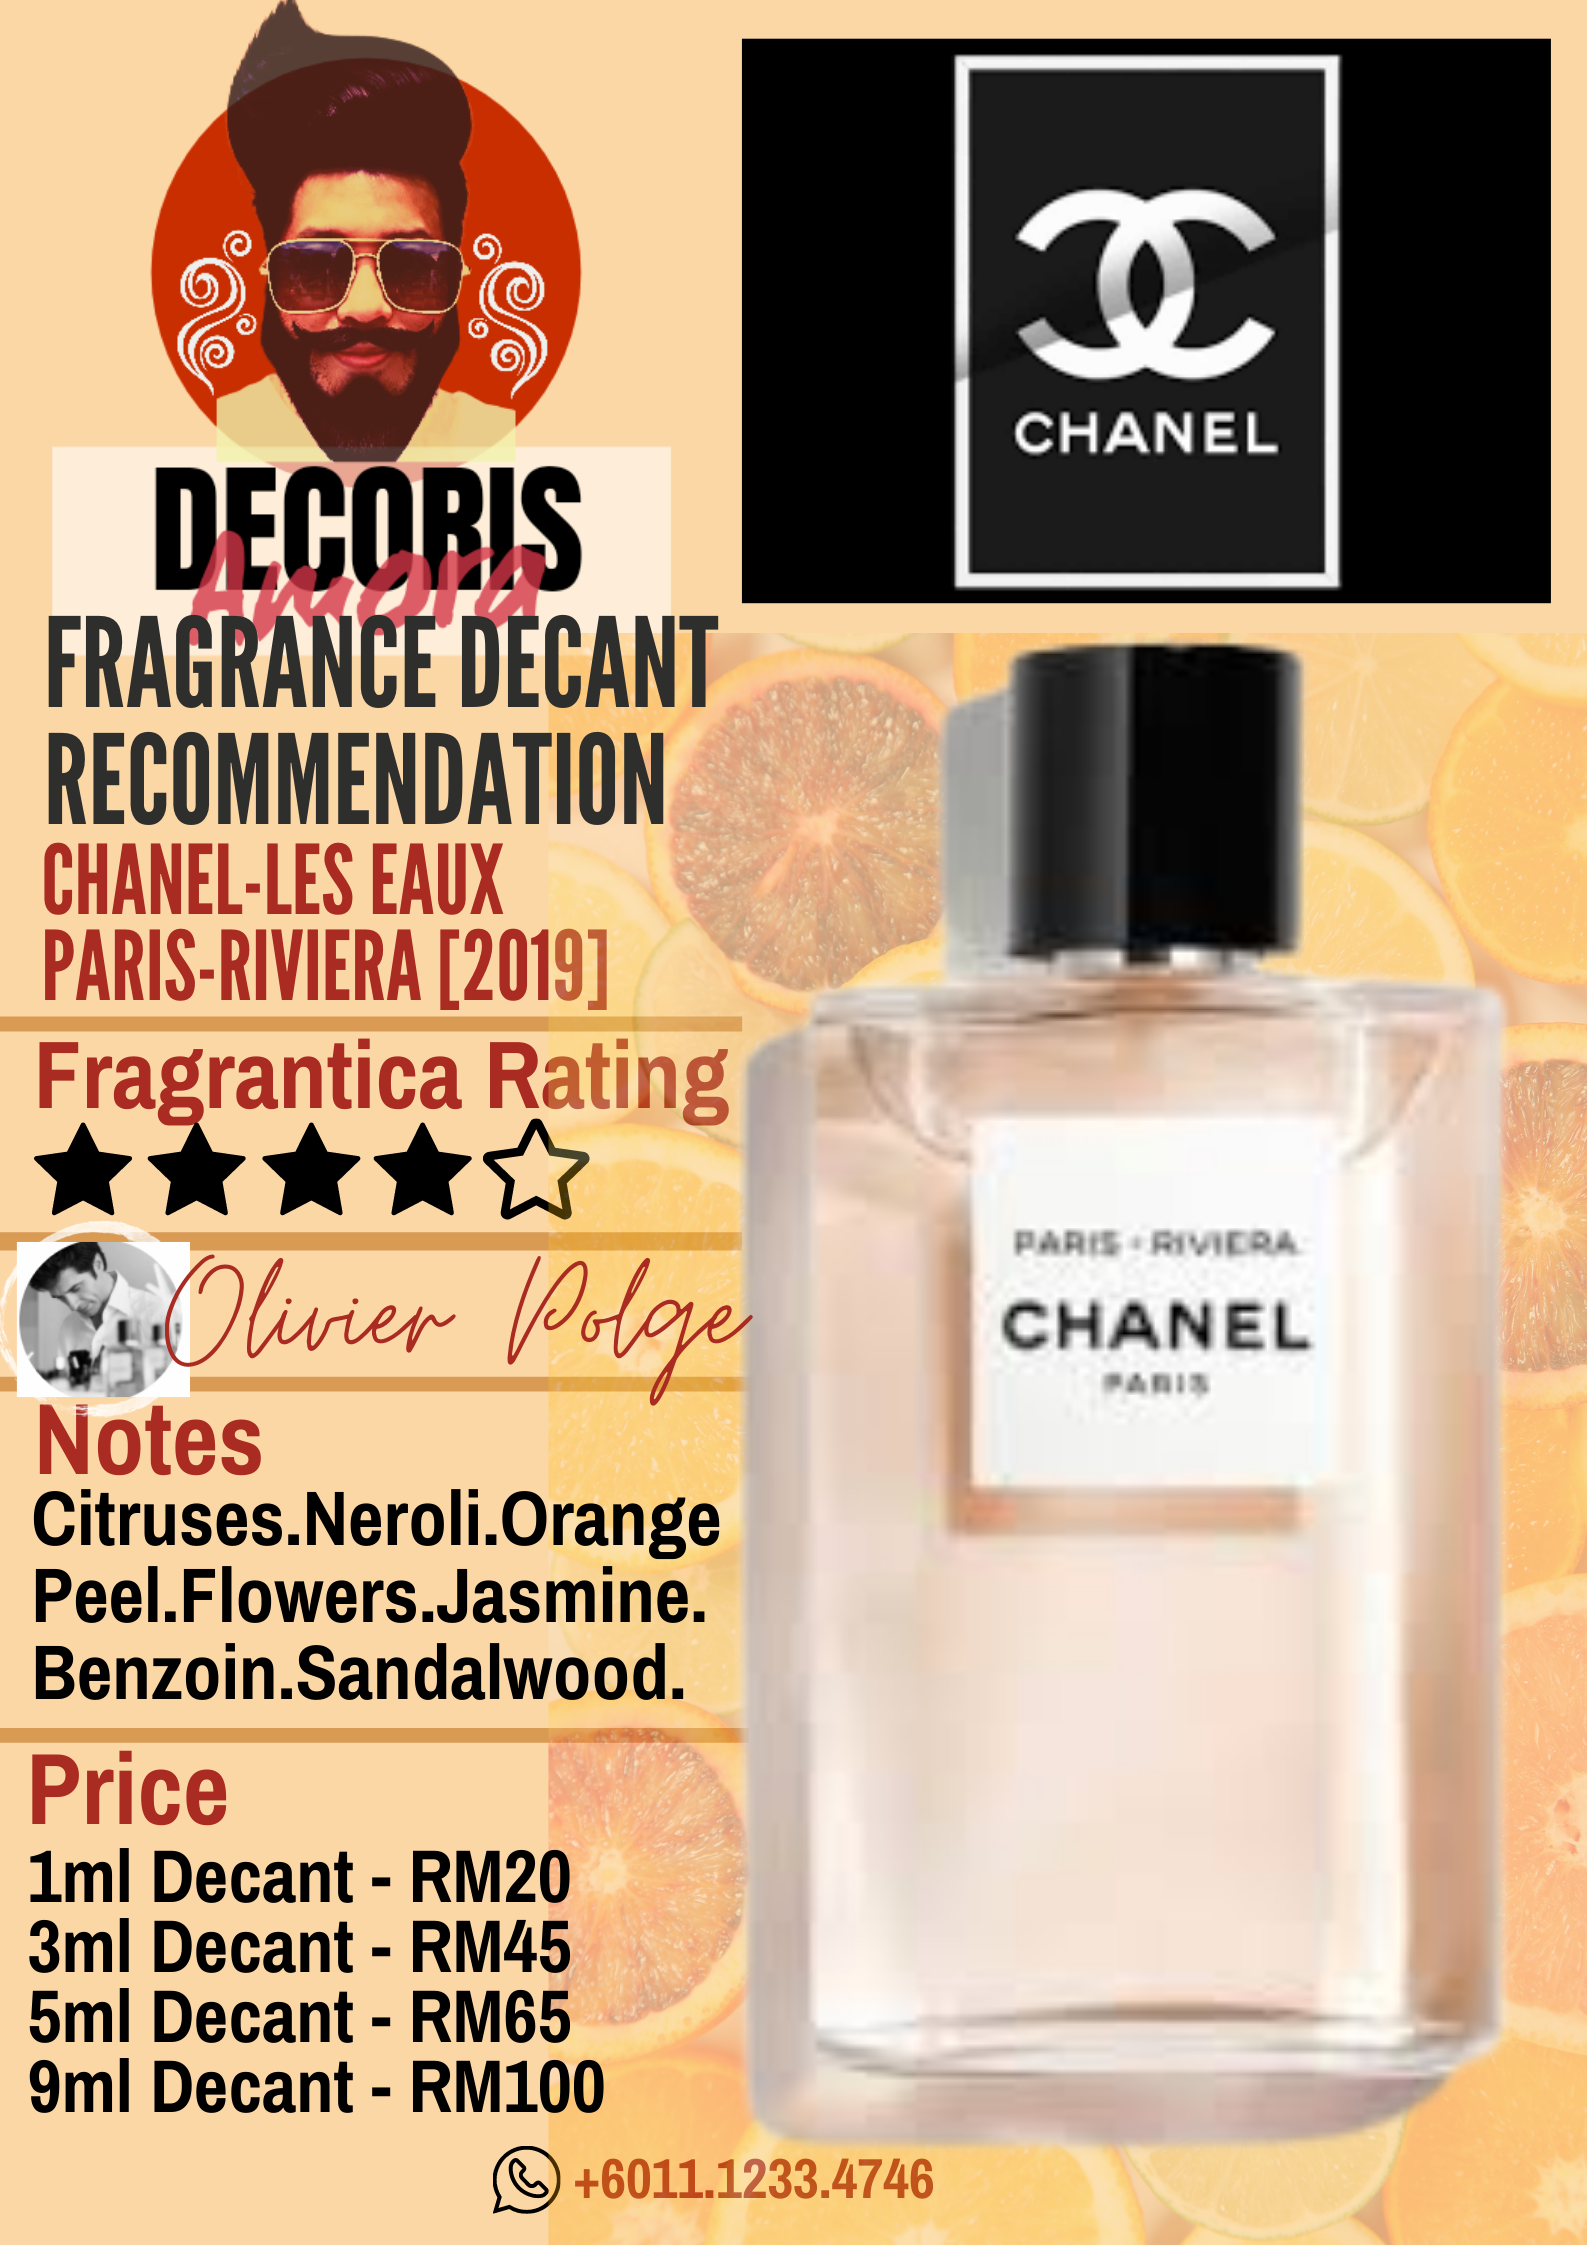 Chanel PARIS-RIVIERA